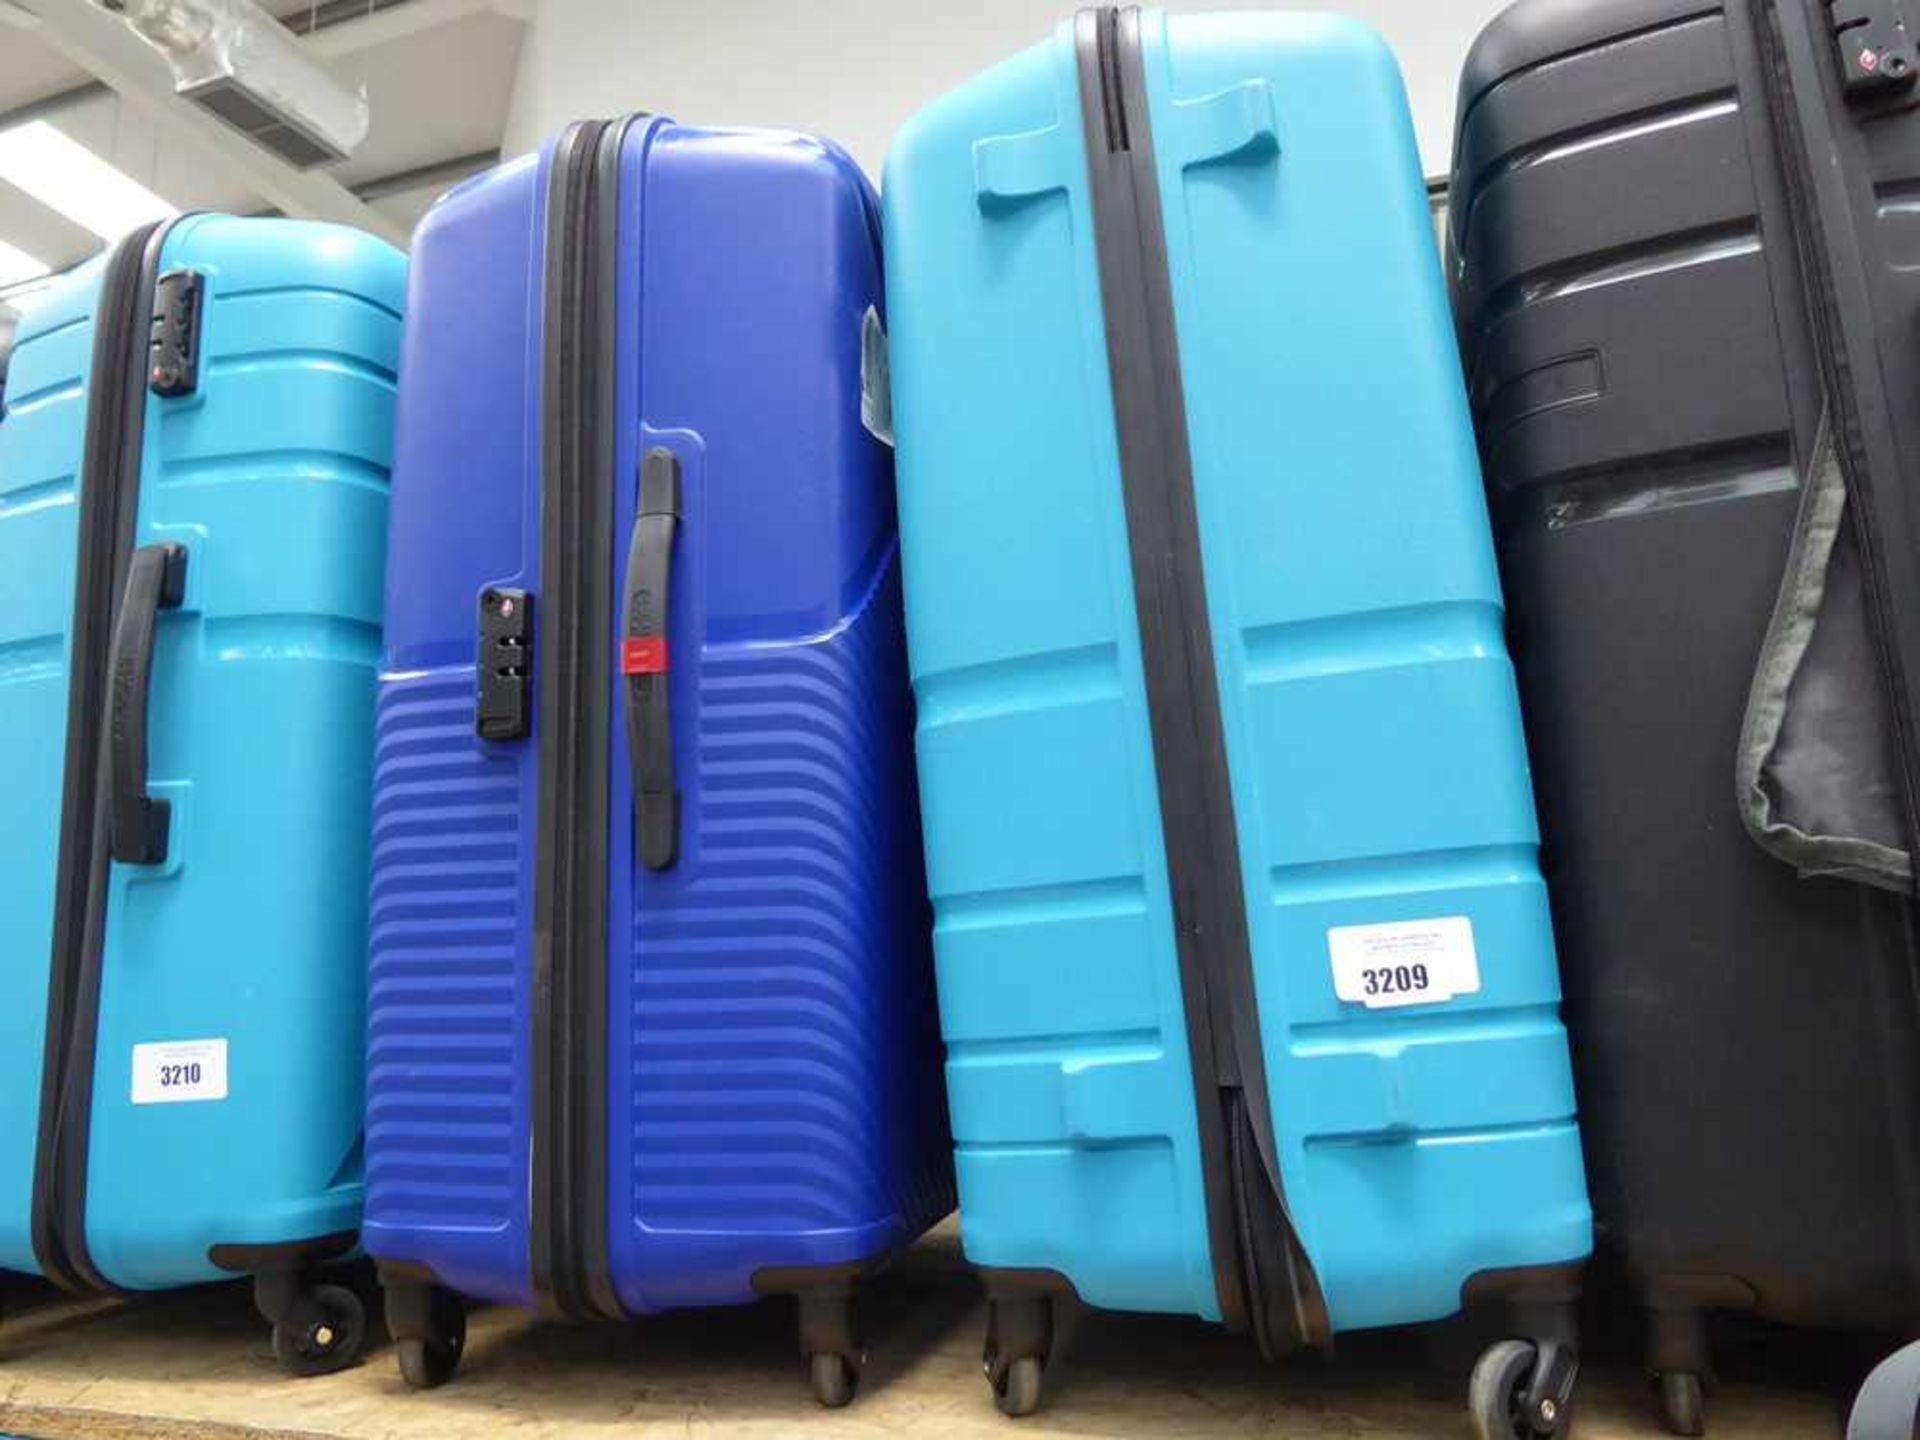 +VAT 2 large hardshelled American Tourister suitcases in dark blue and light blue